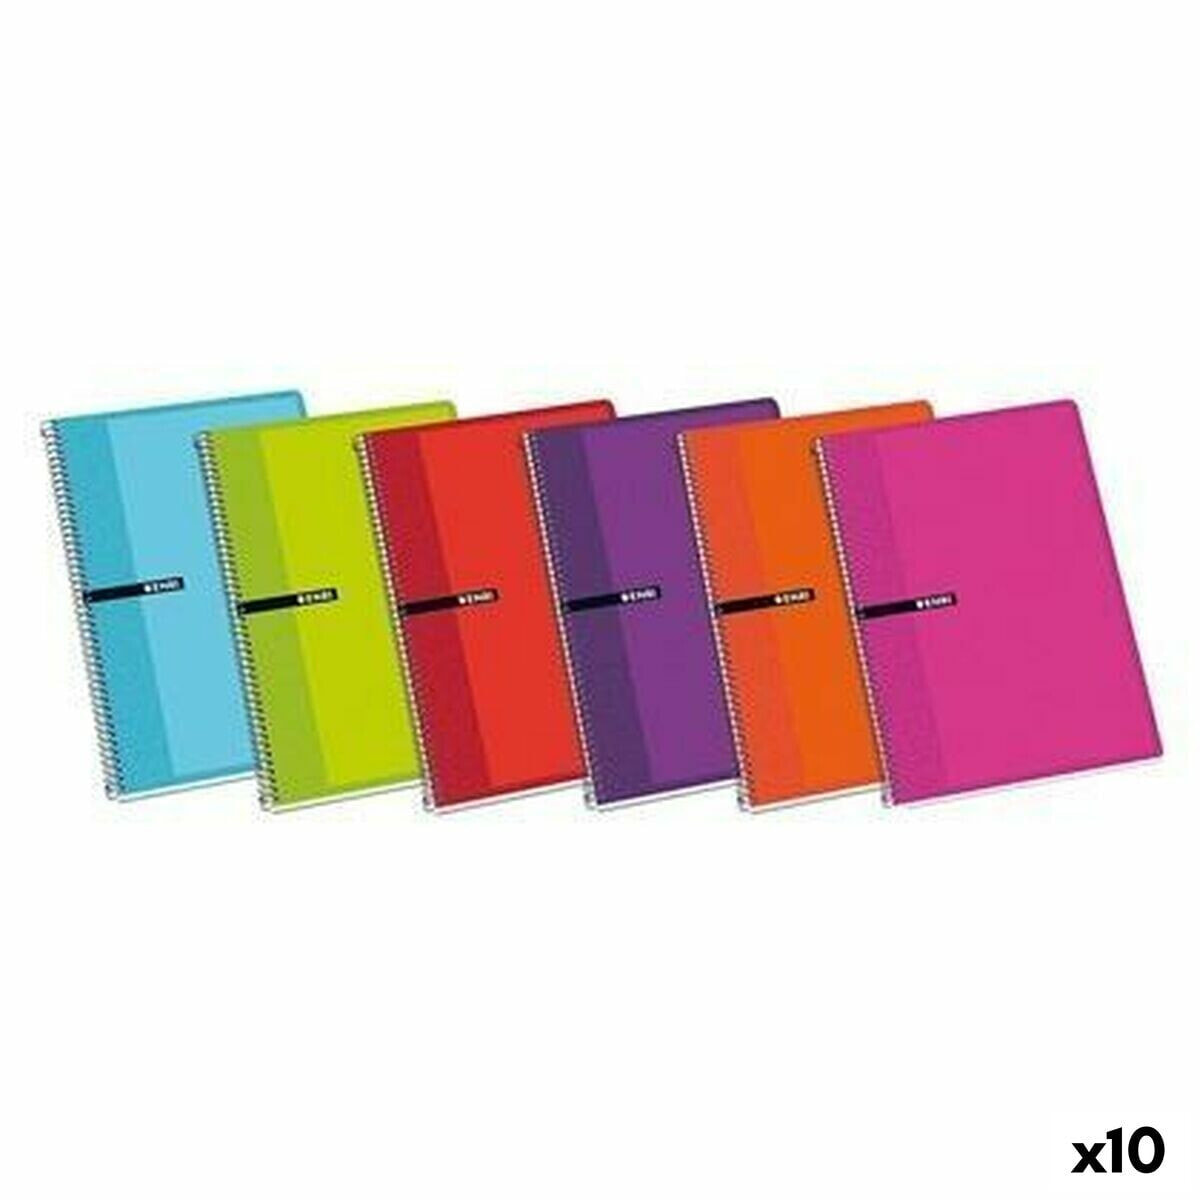 Notebook ENRI Soft cover 80 Sheets 21,5 x 15,5 cm (10 Units)